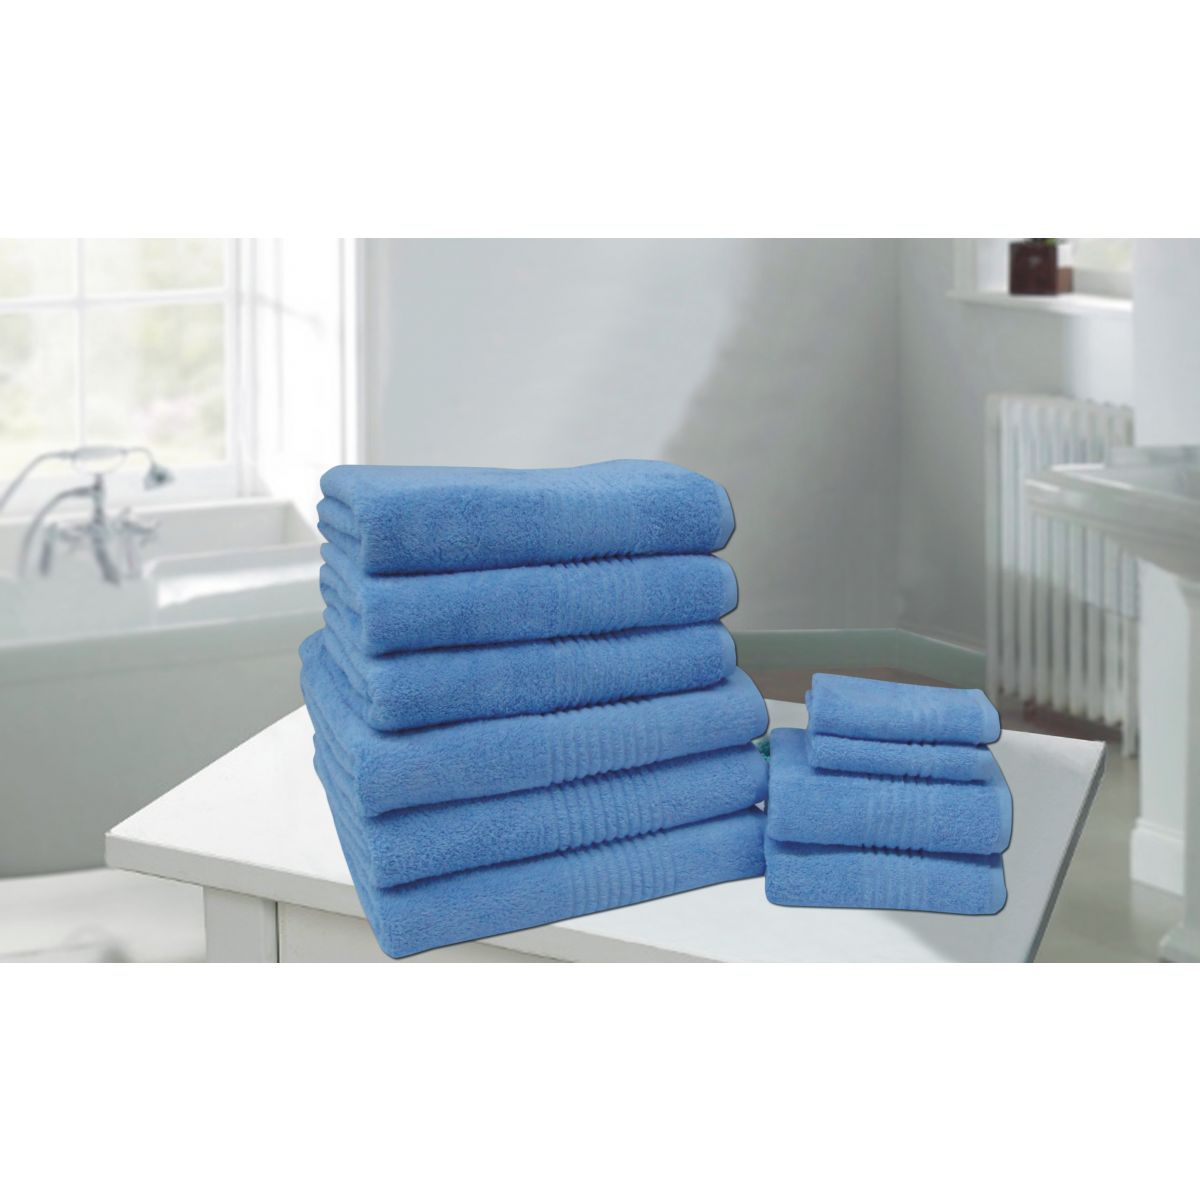 Highams 10 Piece Towel Bale Gift Sets 550 gsm - 100% Cotton - Blue